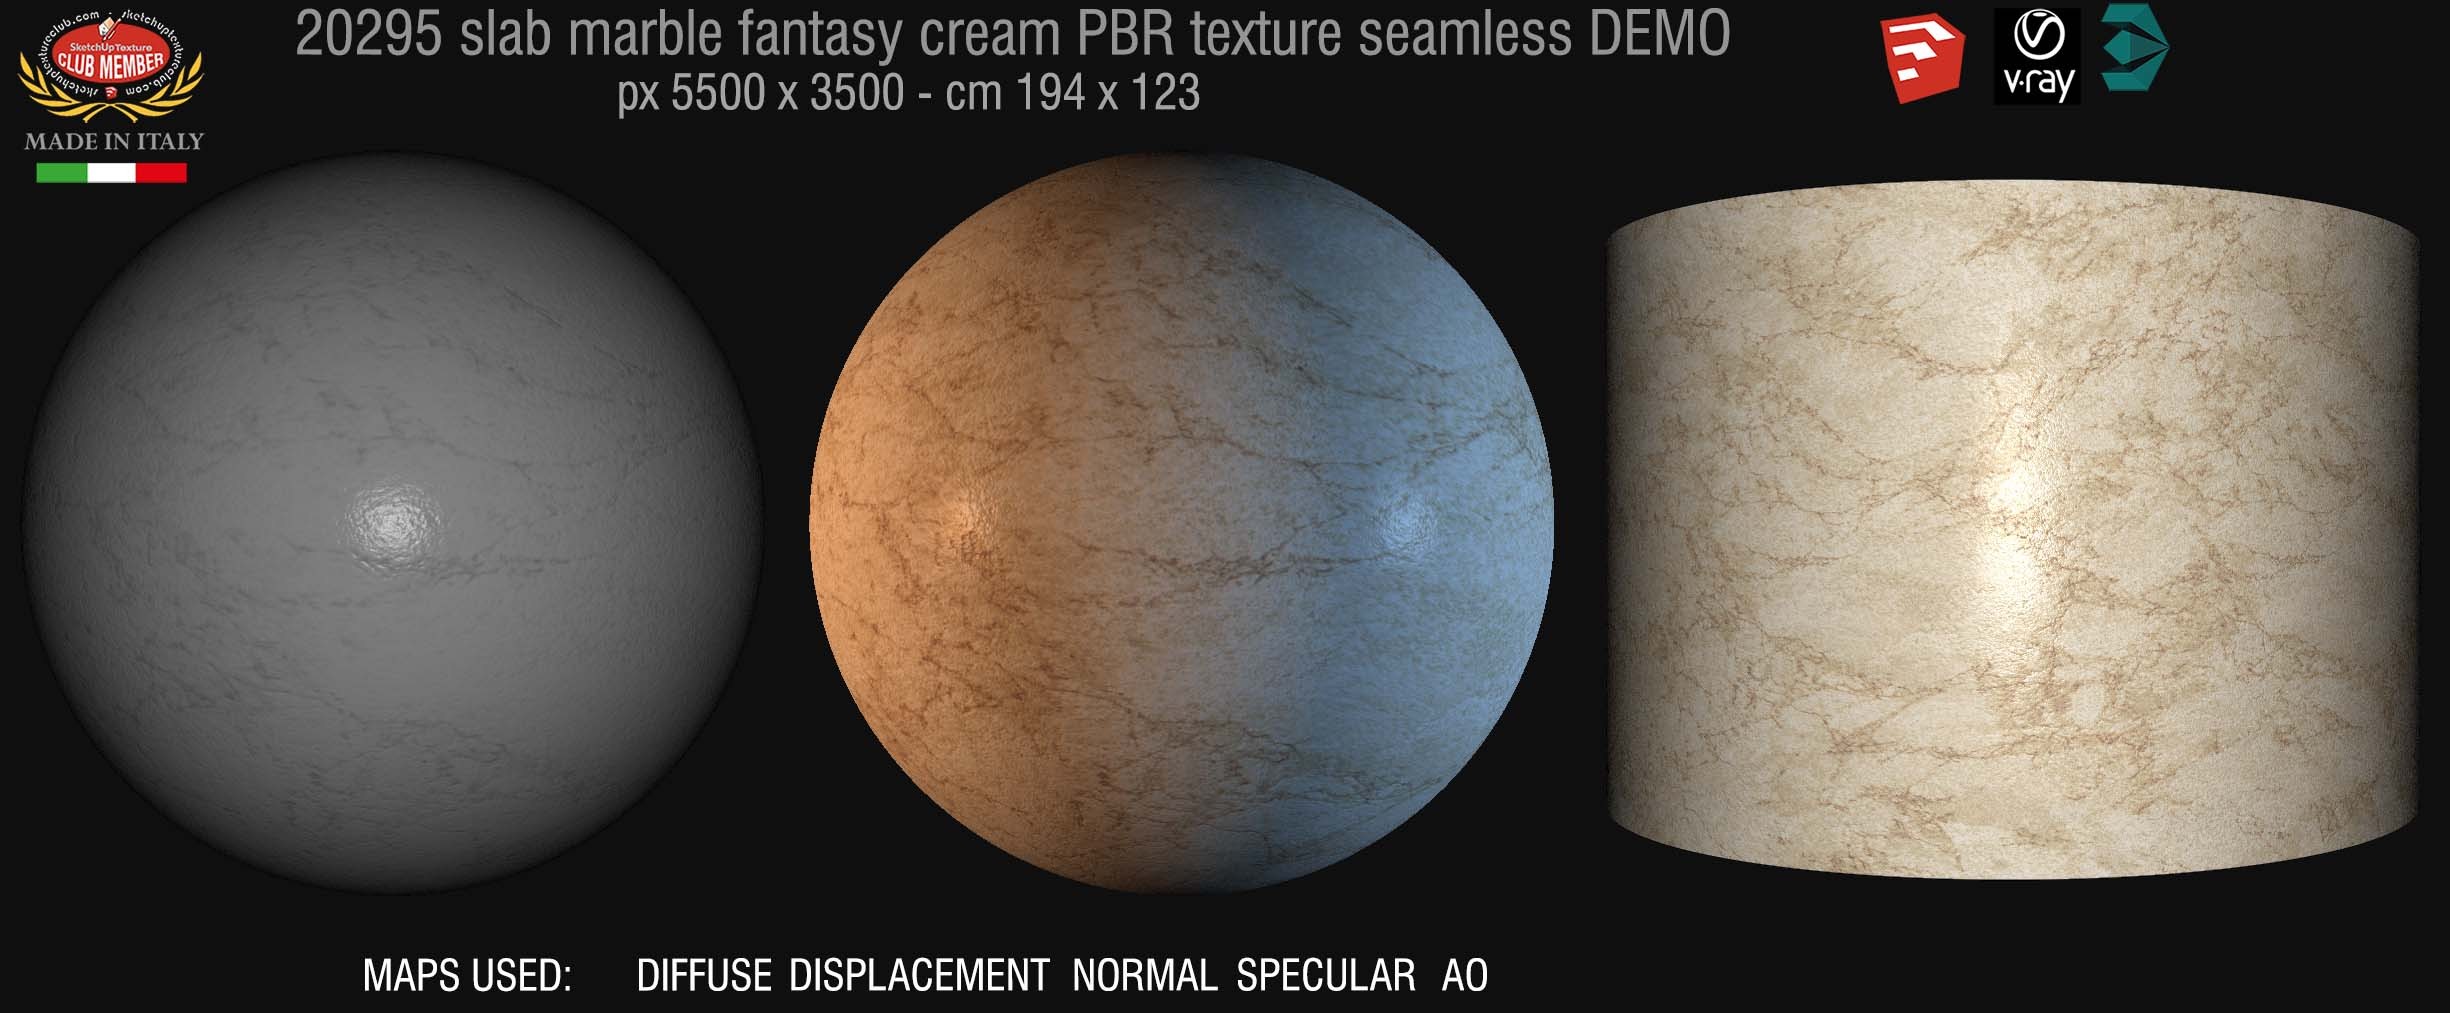 20295 slab marble fantasy cream PBR texture seamless DEMO